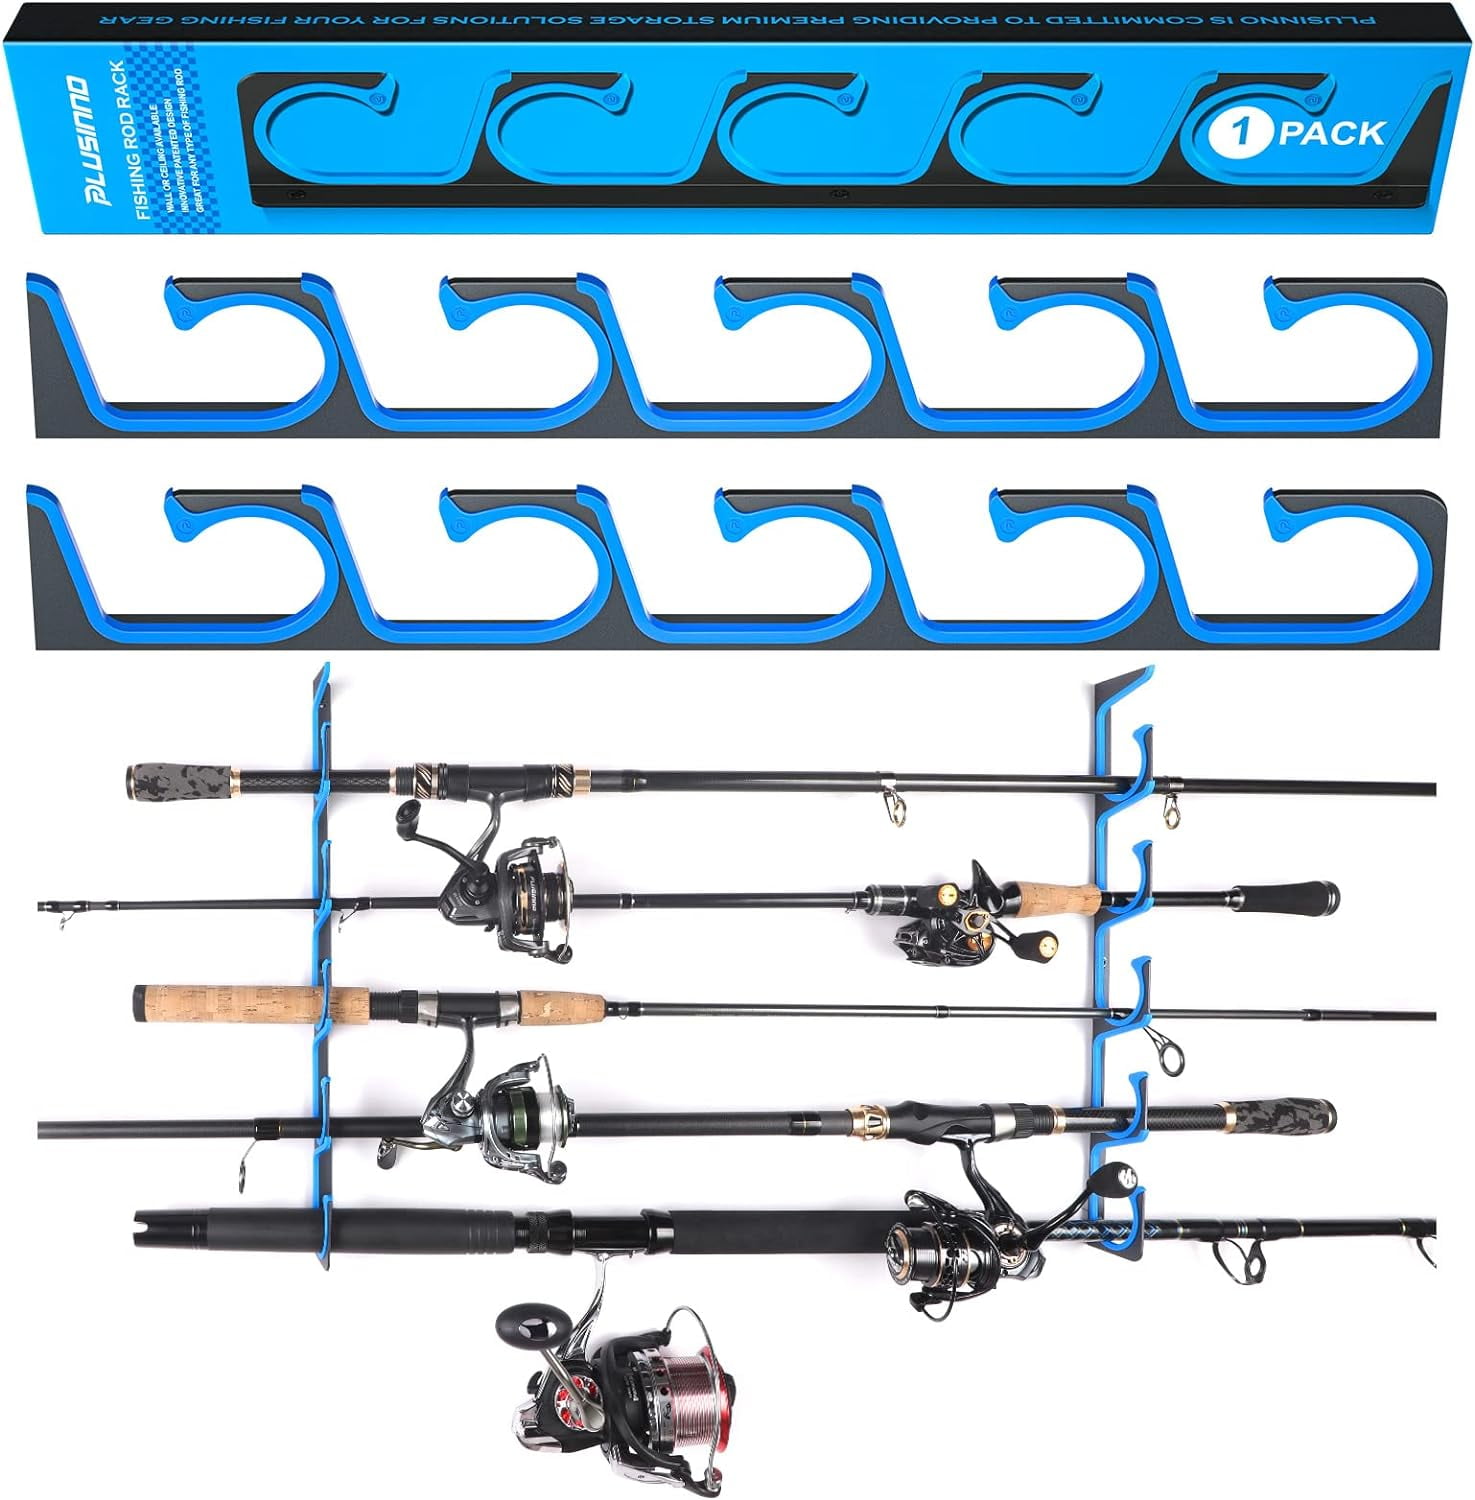 PLUSINNO H5 Horizontal Fishing Rod/Pole Holders for Garage, Wall